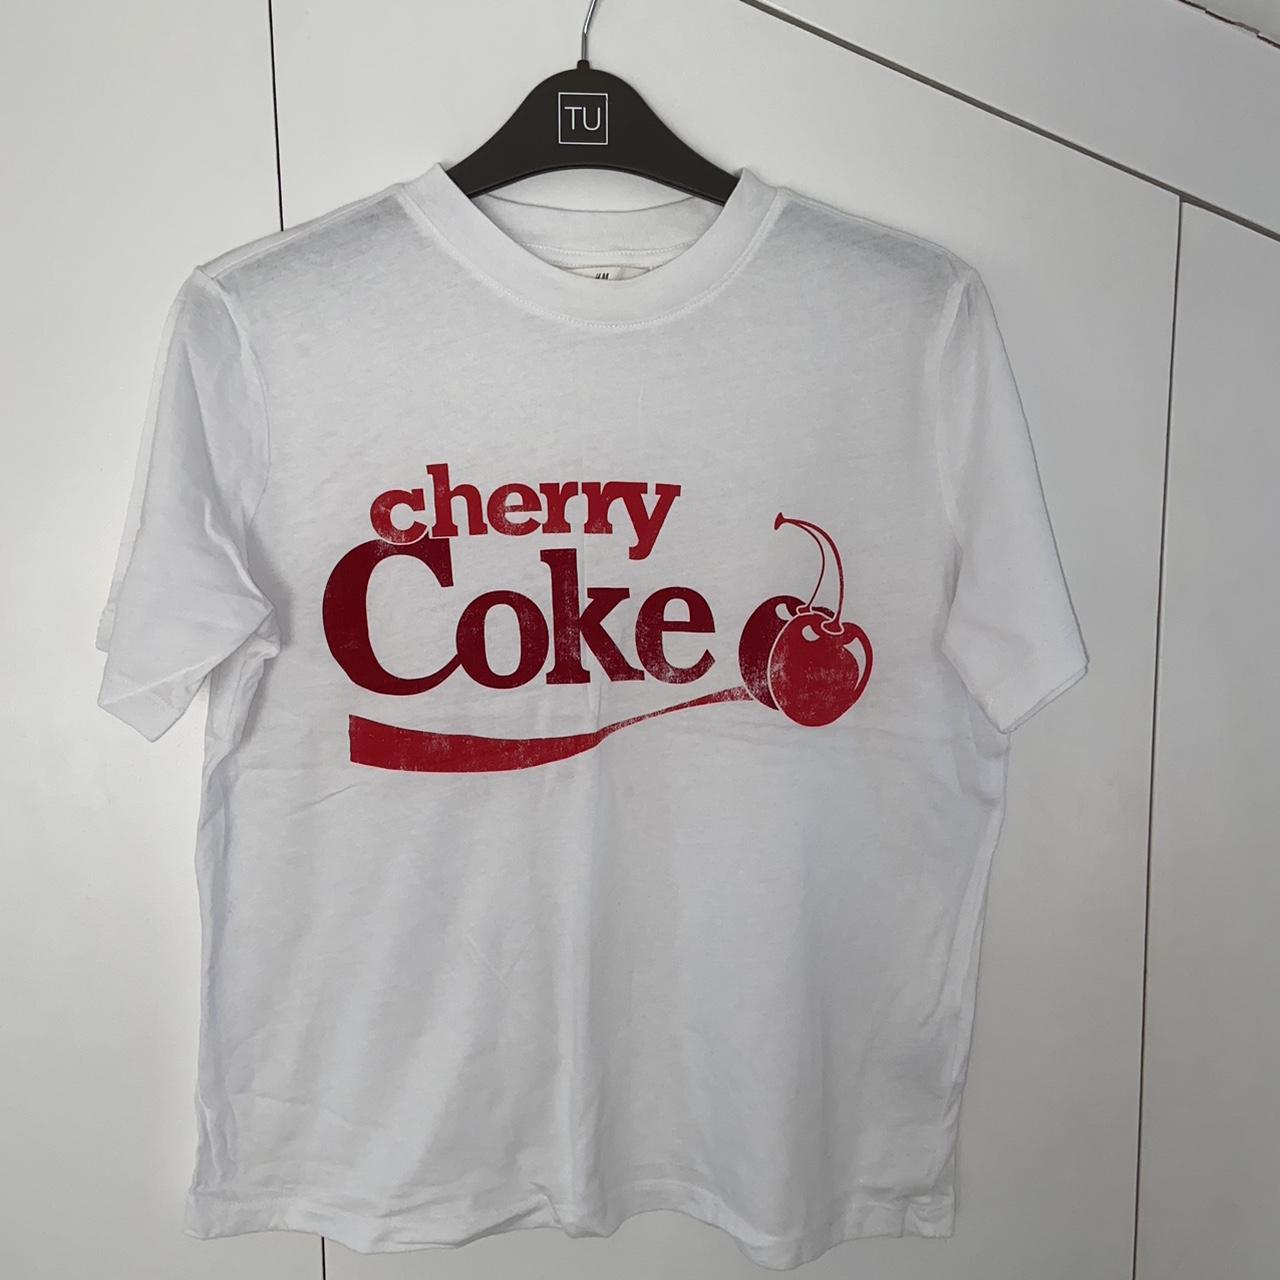 H&M Cherry Coke Graphic T-shirt Size: S/M (slightly... - Depop